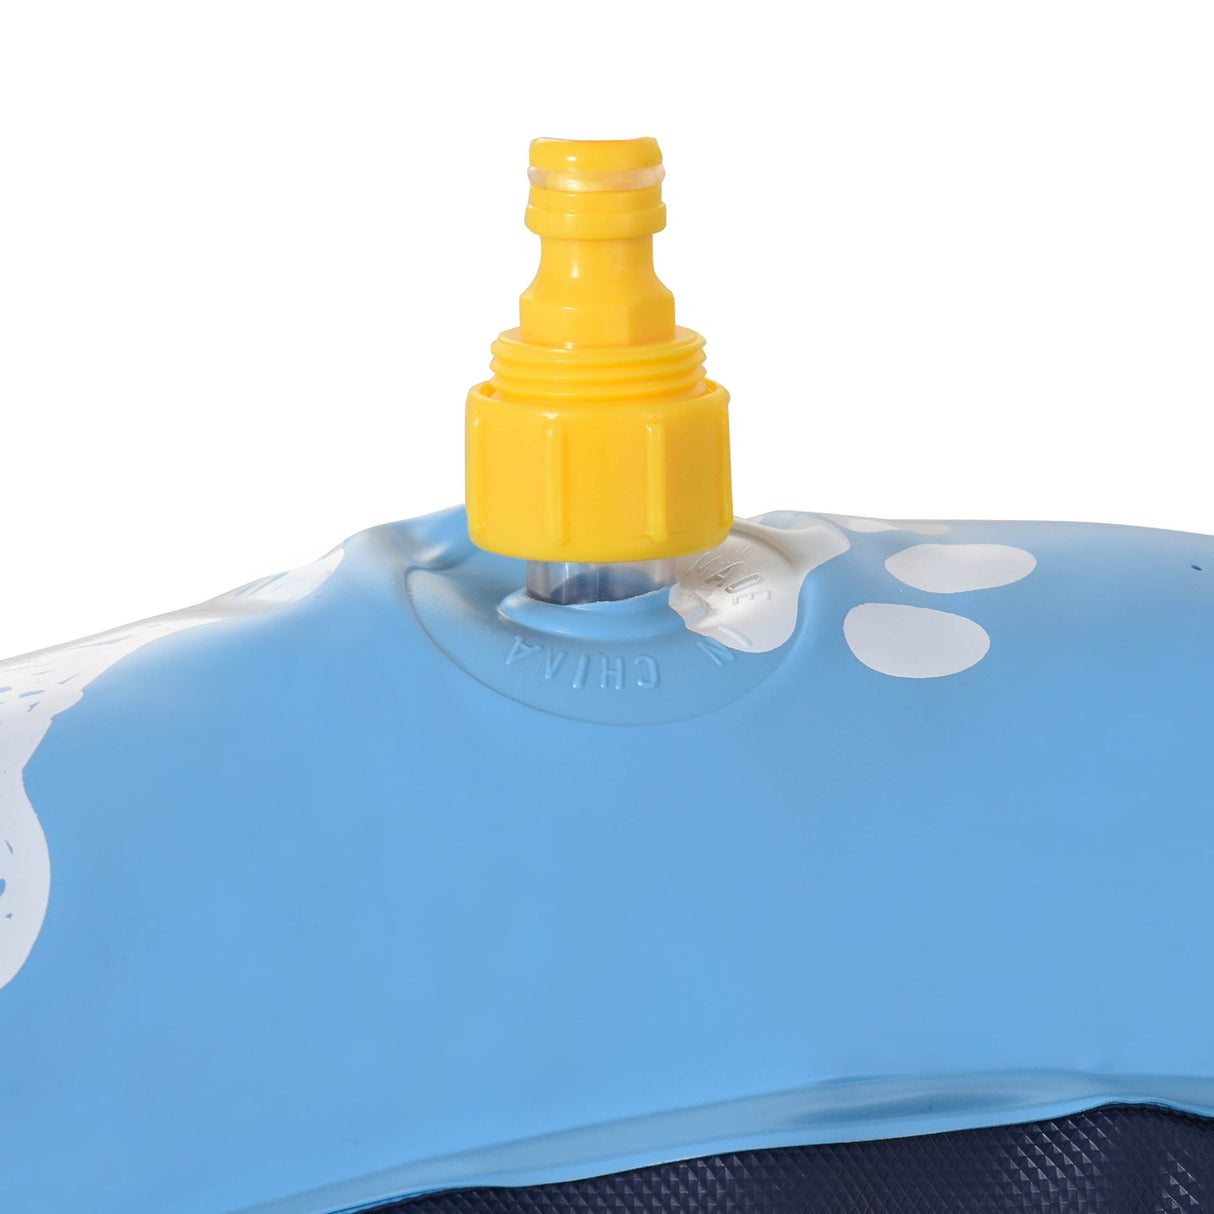 170cm Splash Pad with Sprinkler for Pets, PawHut, Blue